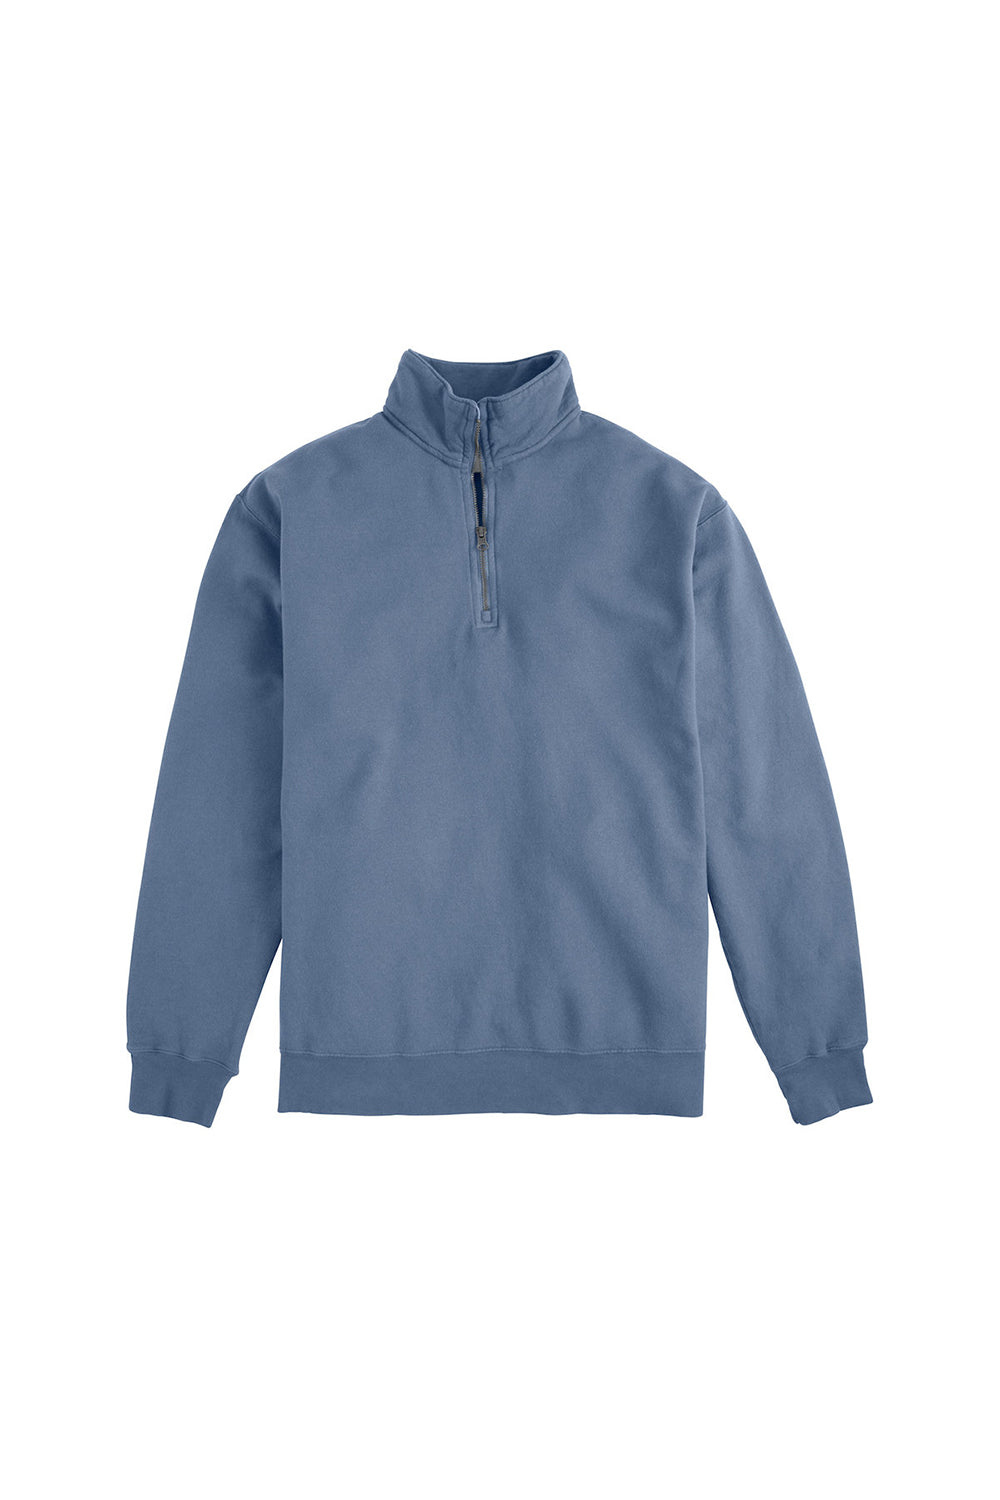 ComfortWash by Hanes GDH425 Mens 1/4 Zip Sweatshirt Saltwater Blue Flat Front